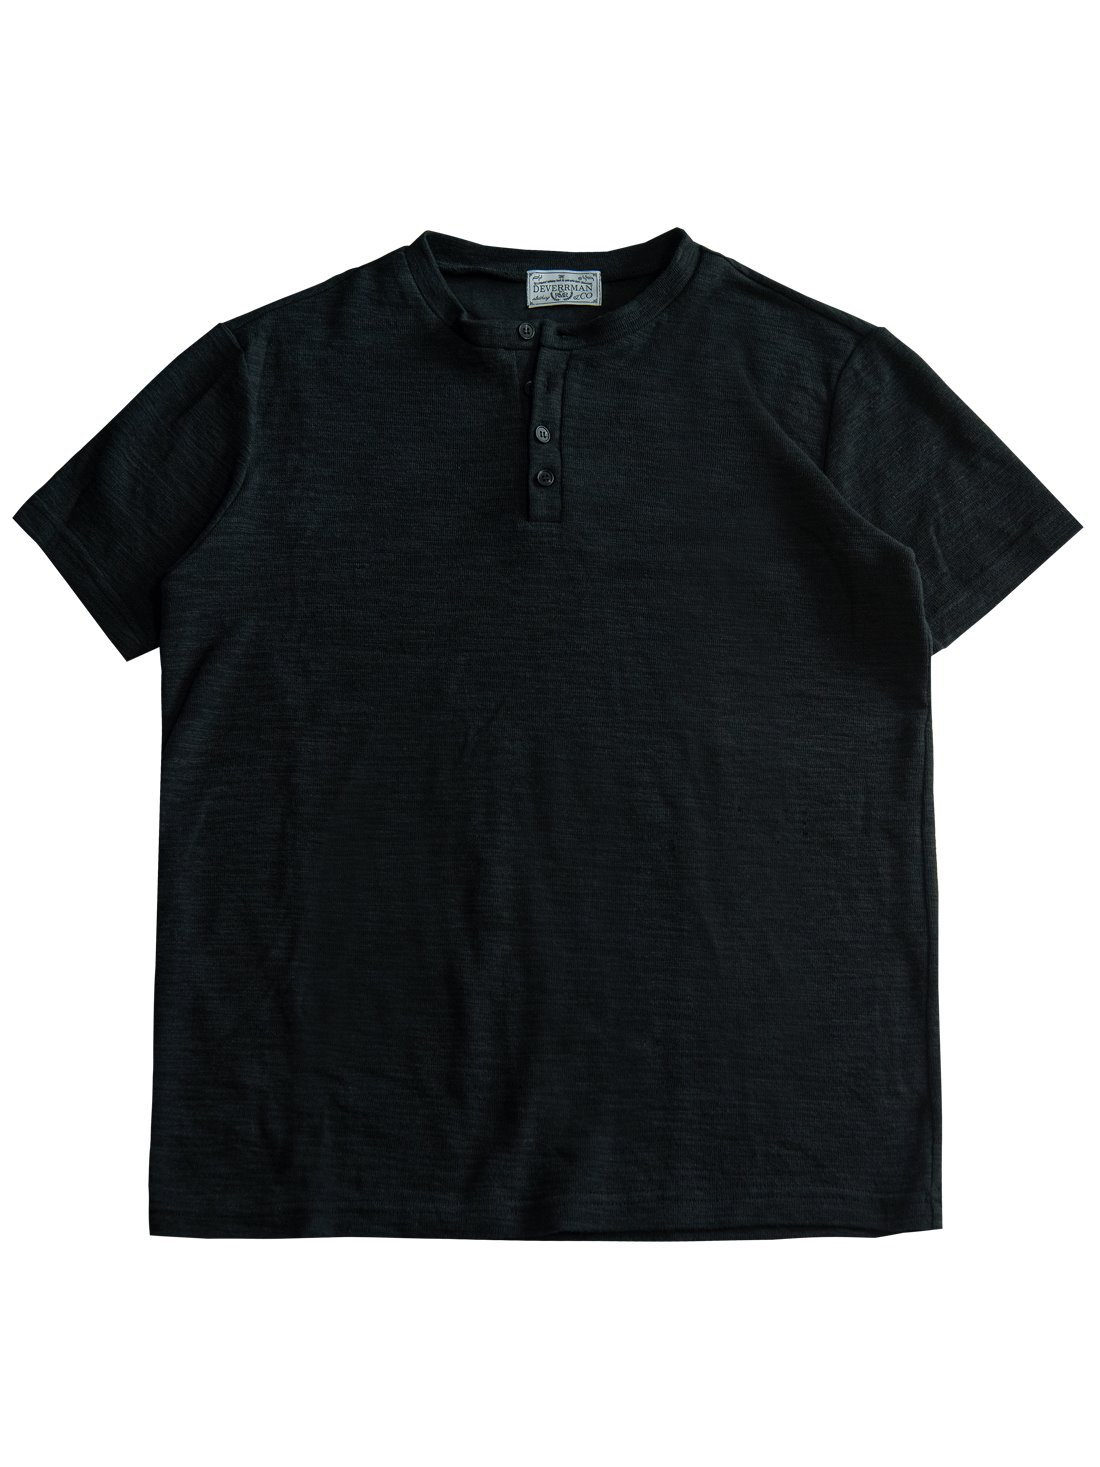 muscle fit slub henly neck T shirt (black)